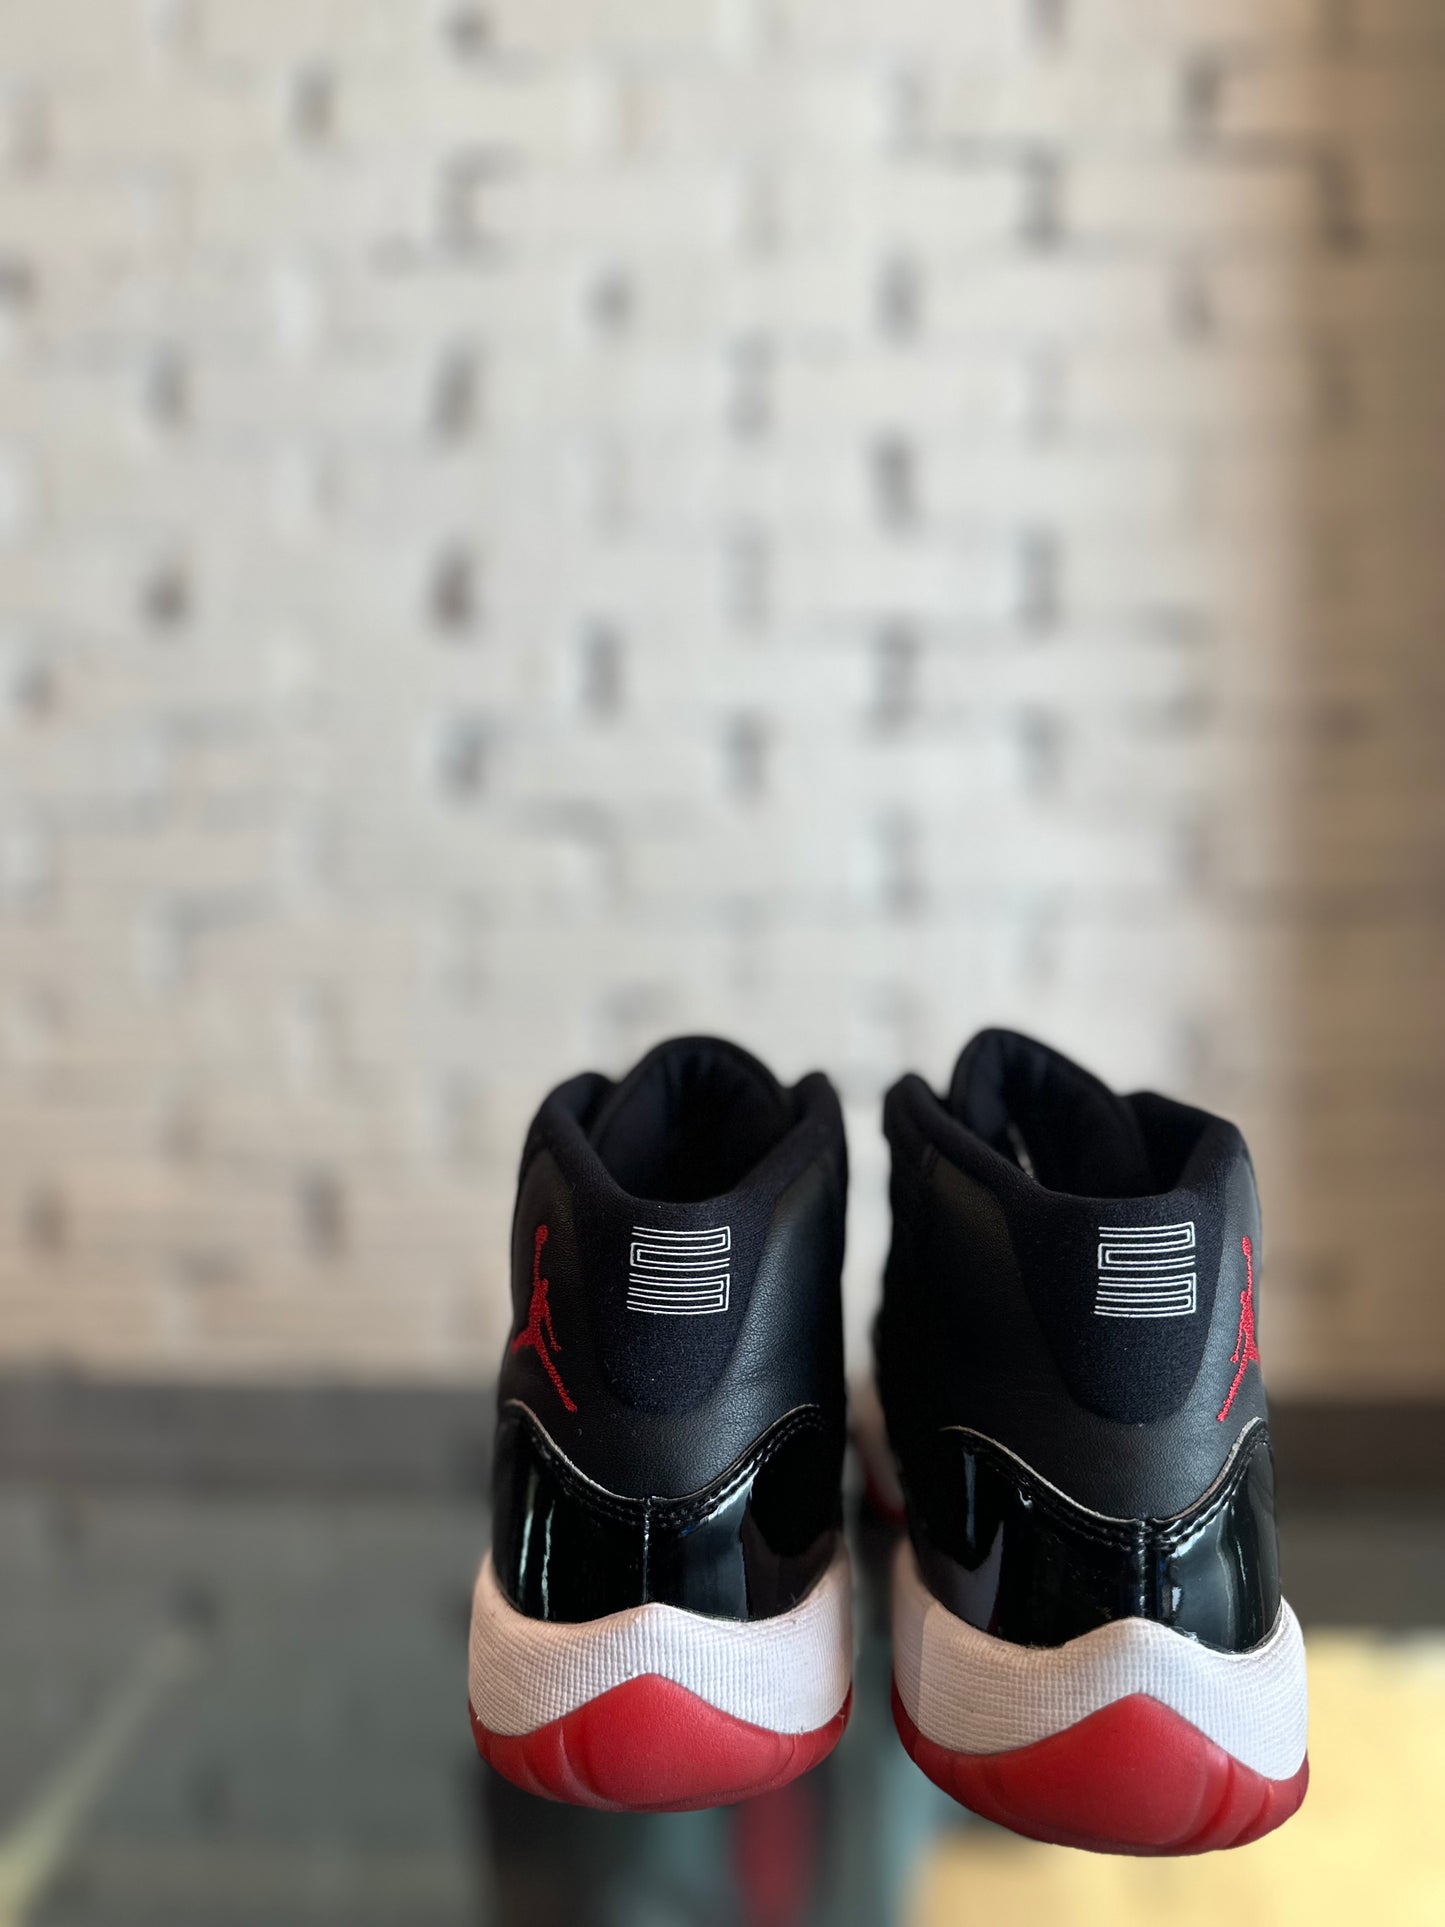 Air Jordan 11 “Bred” Size 4 VNDS OG